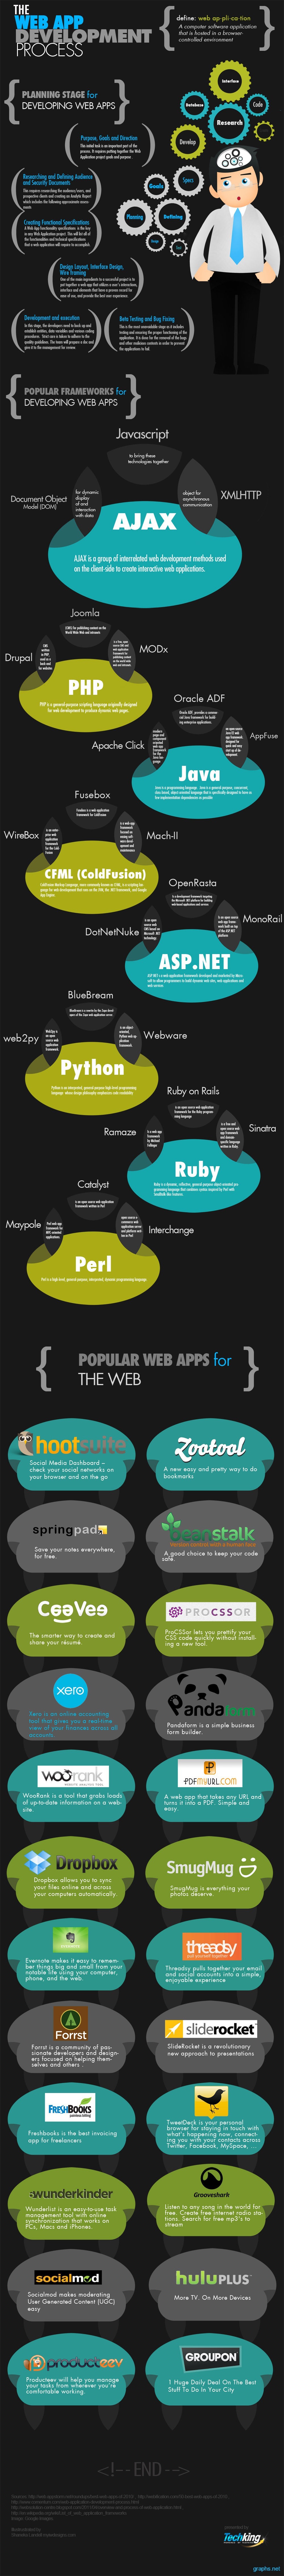 web application development ideas